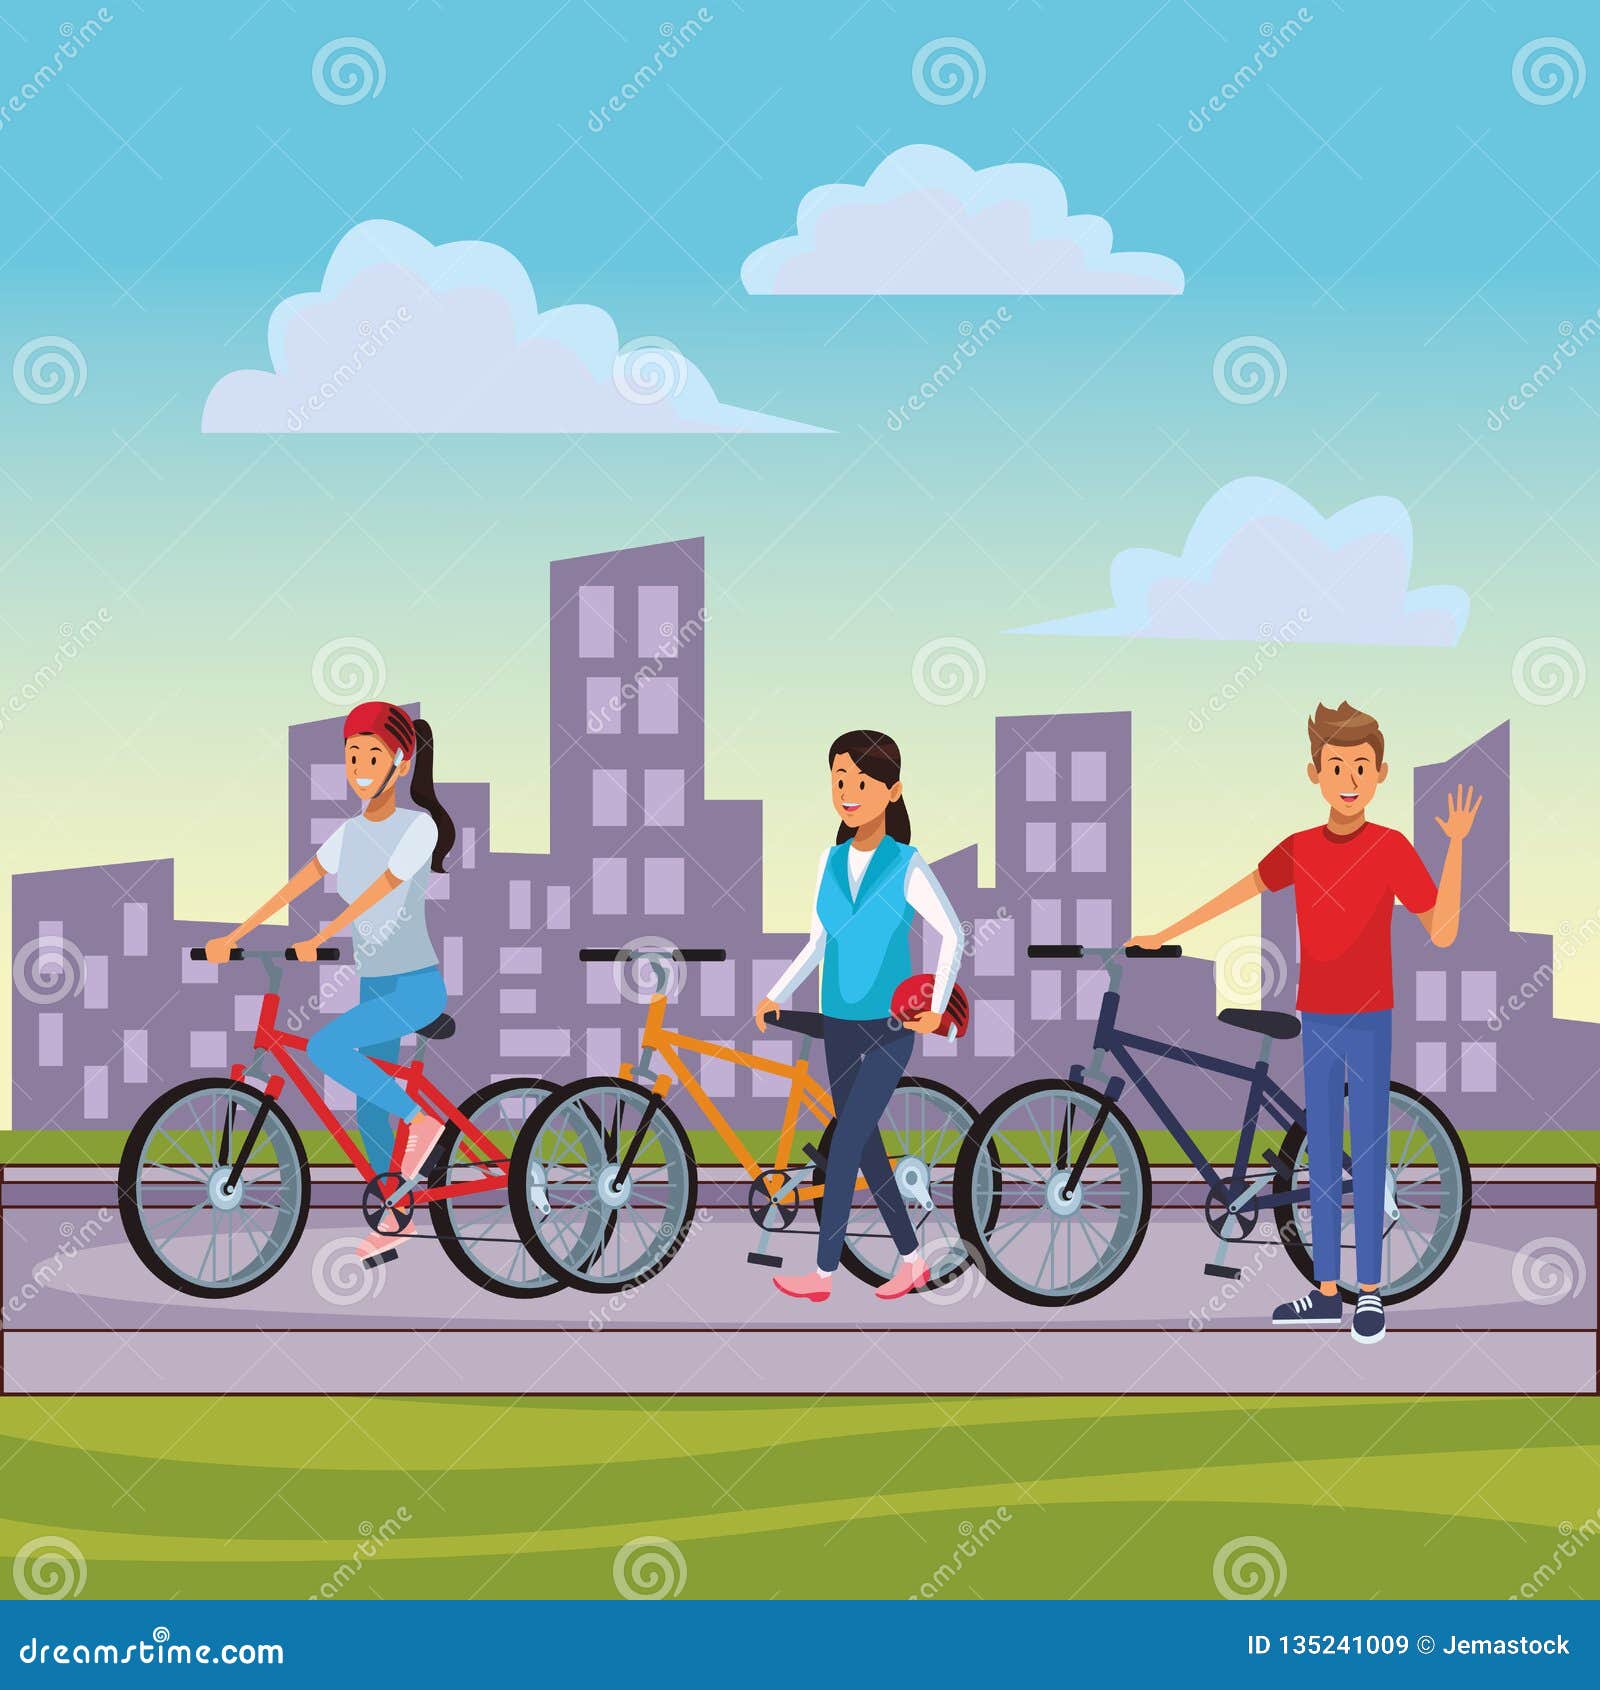 friends riding bicicle